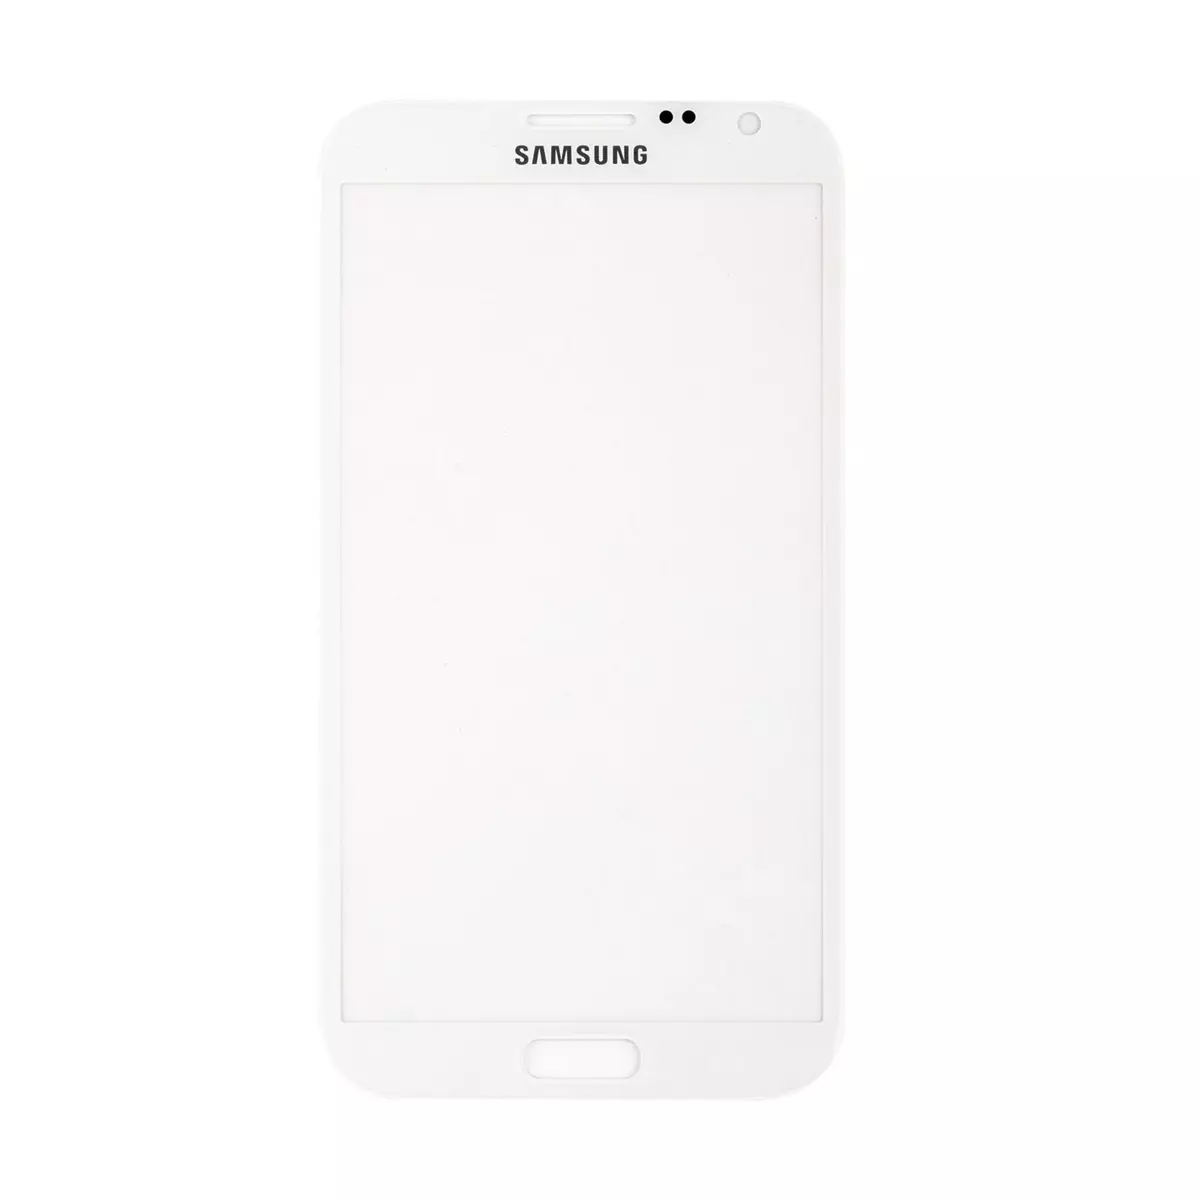 Samsung Vitre écran de façade blanche + adhésif pour Samsung Galaxy Note 2 N7100 N7105